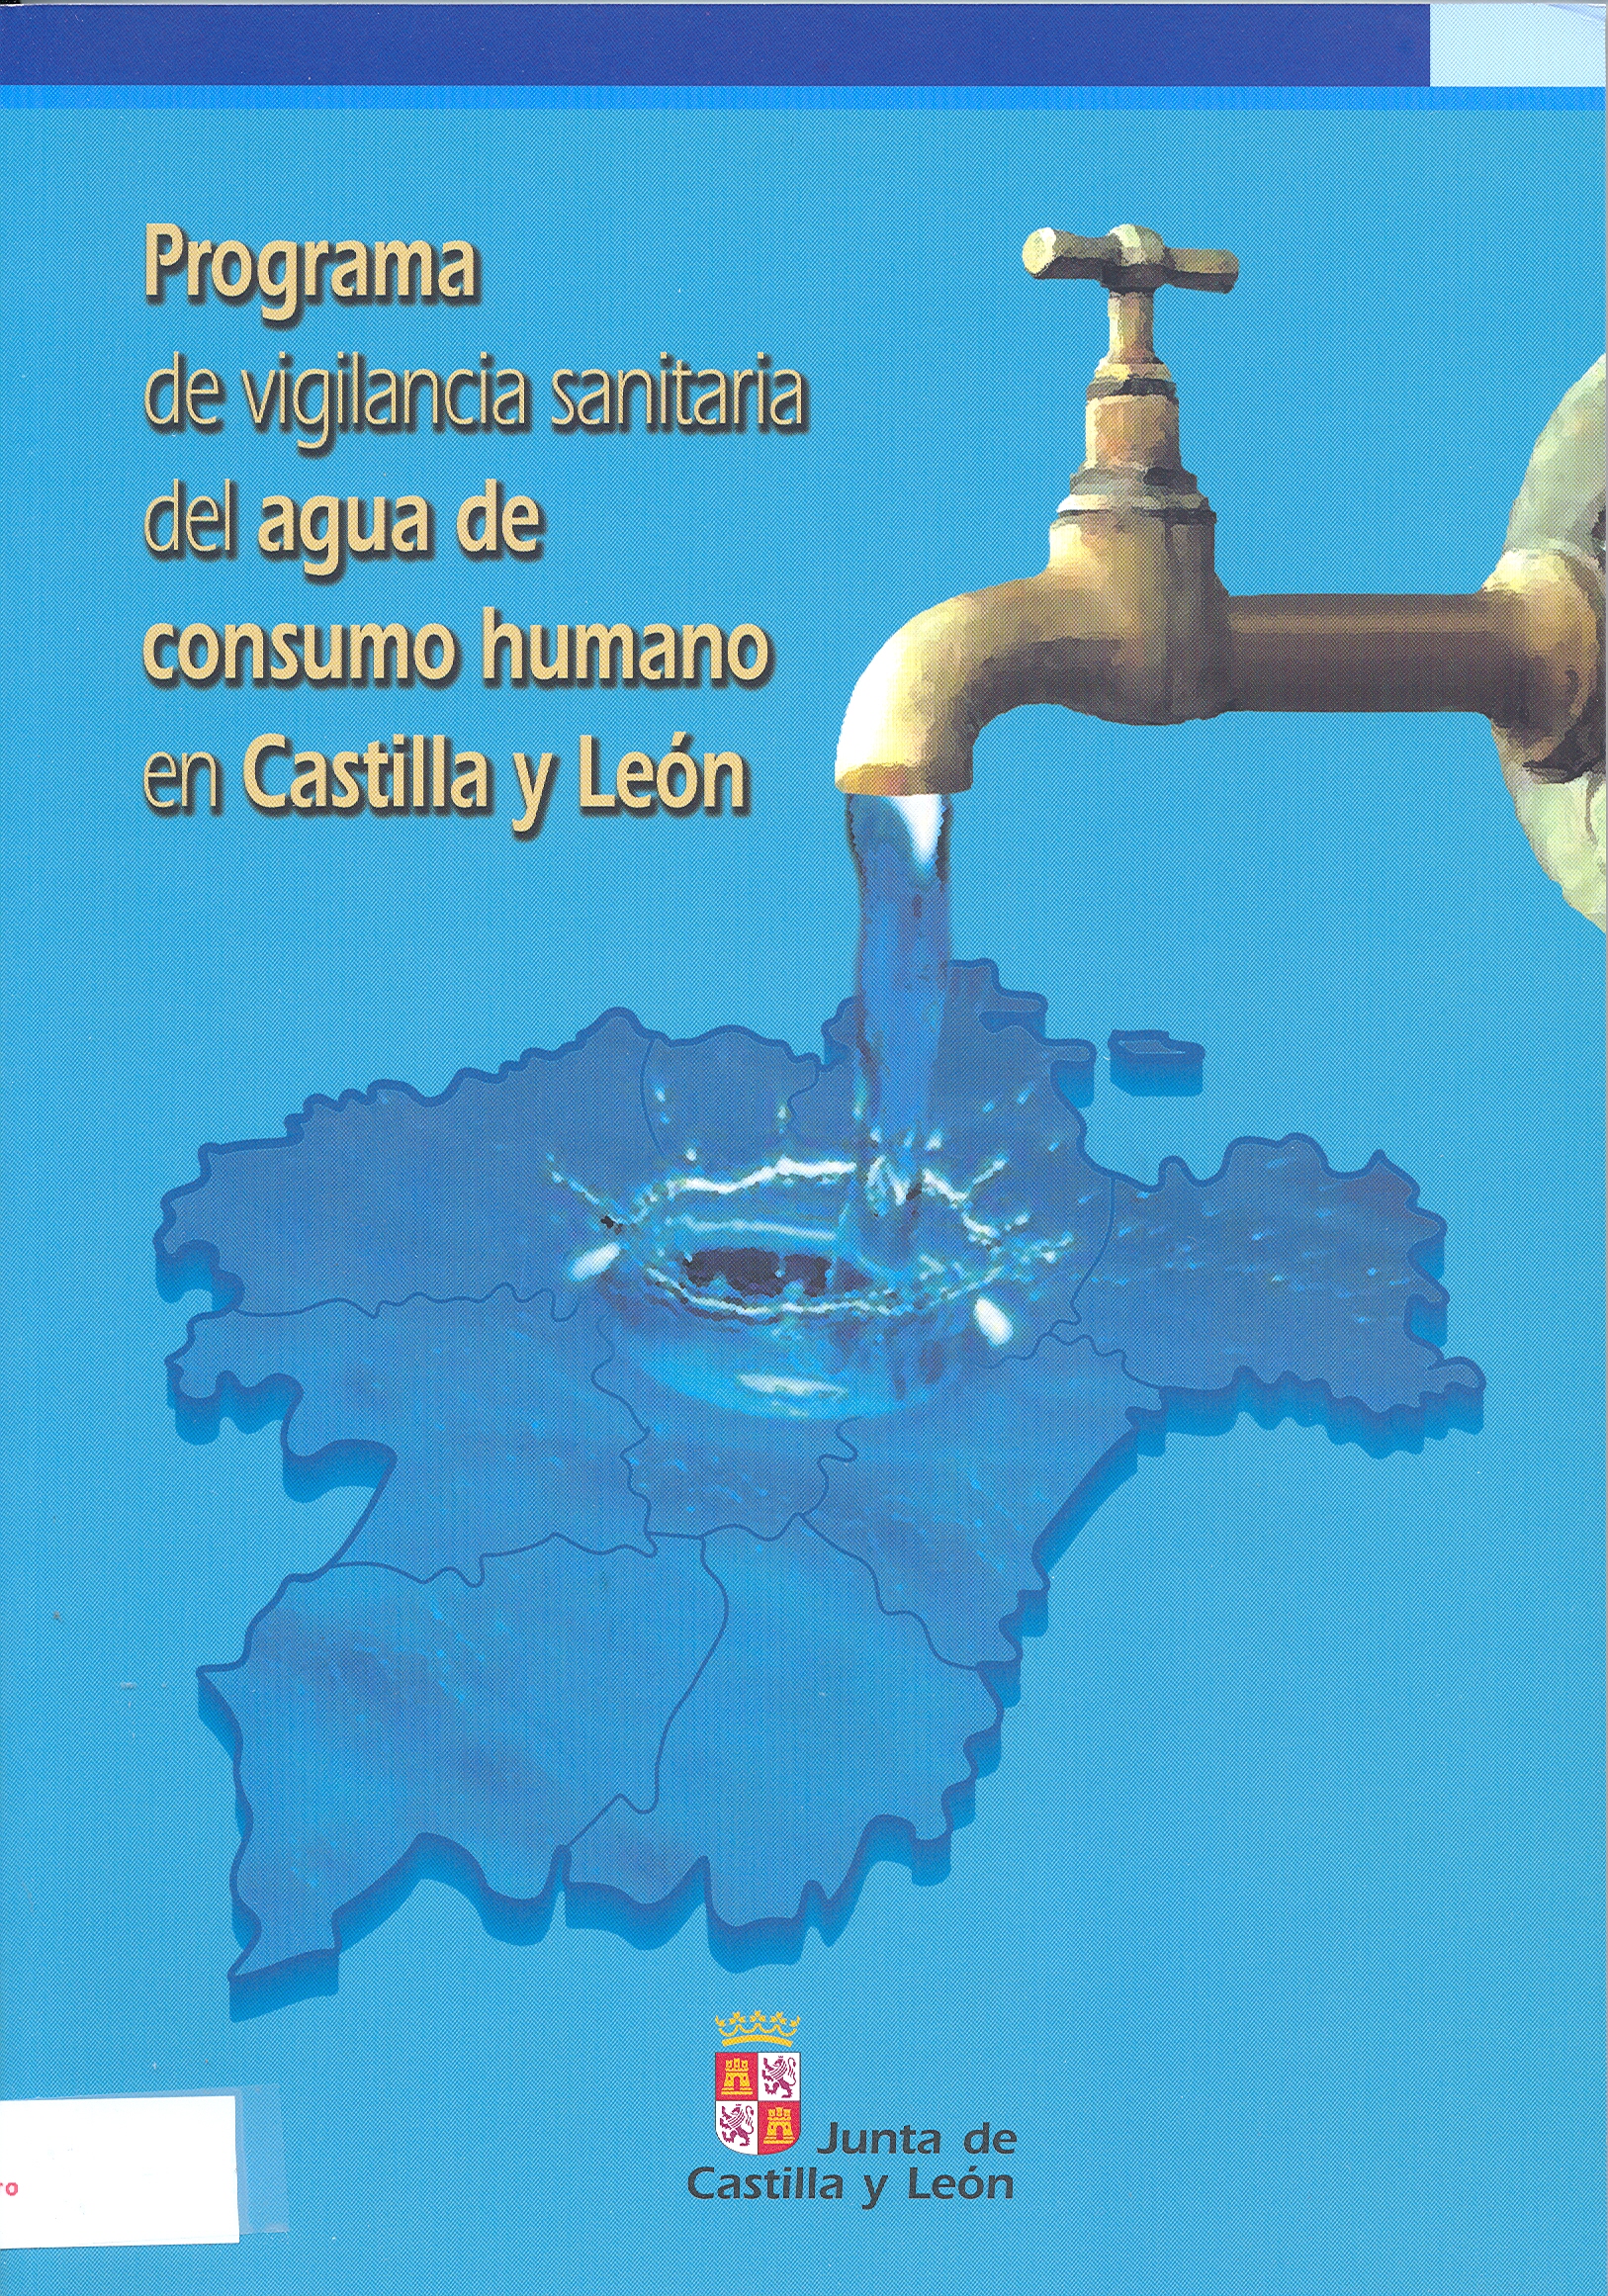 Program de vigilancia sanitariadel agua